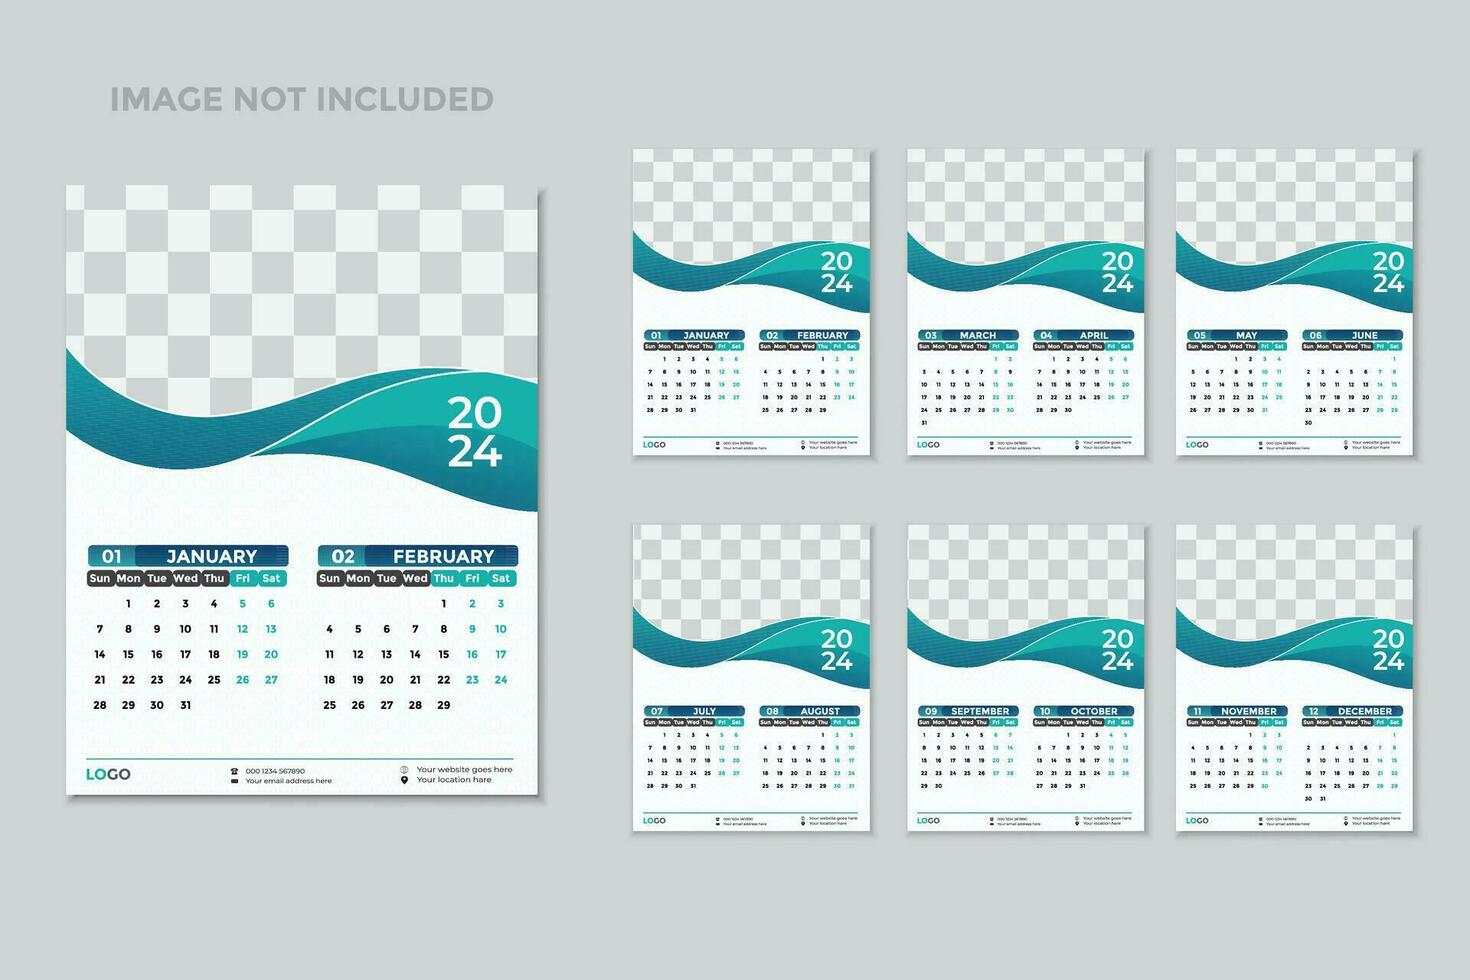 2024 calendar design template vector